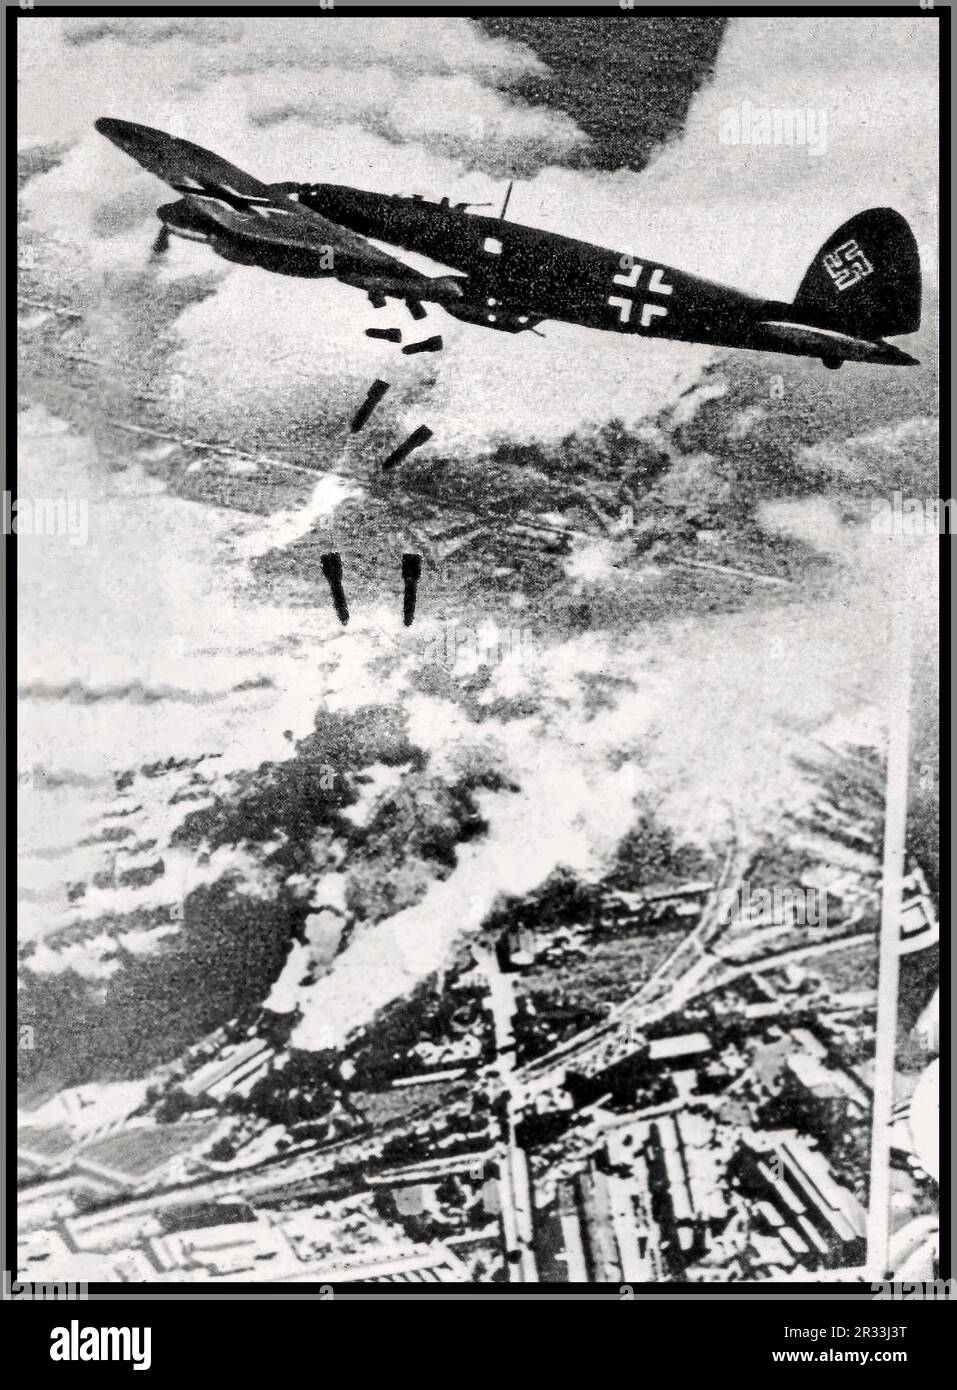 WARSAW BOMBING WW2 Nazi Germany Luftwaffe Heinkel He 111 airplane aircraft bombing Warsaw, Poland in 1939. Nazi Occupation World War II Second World War Stock Photo